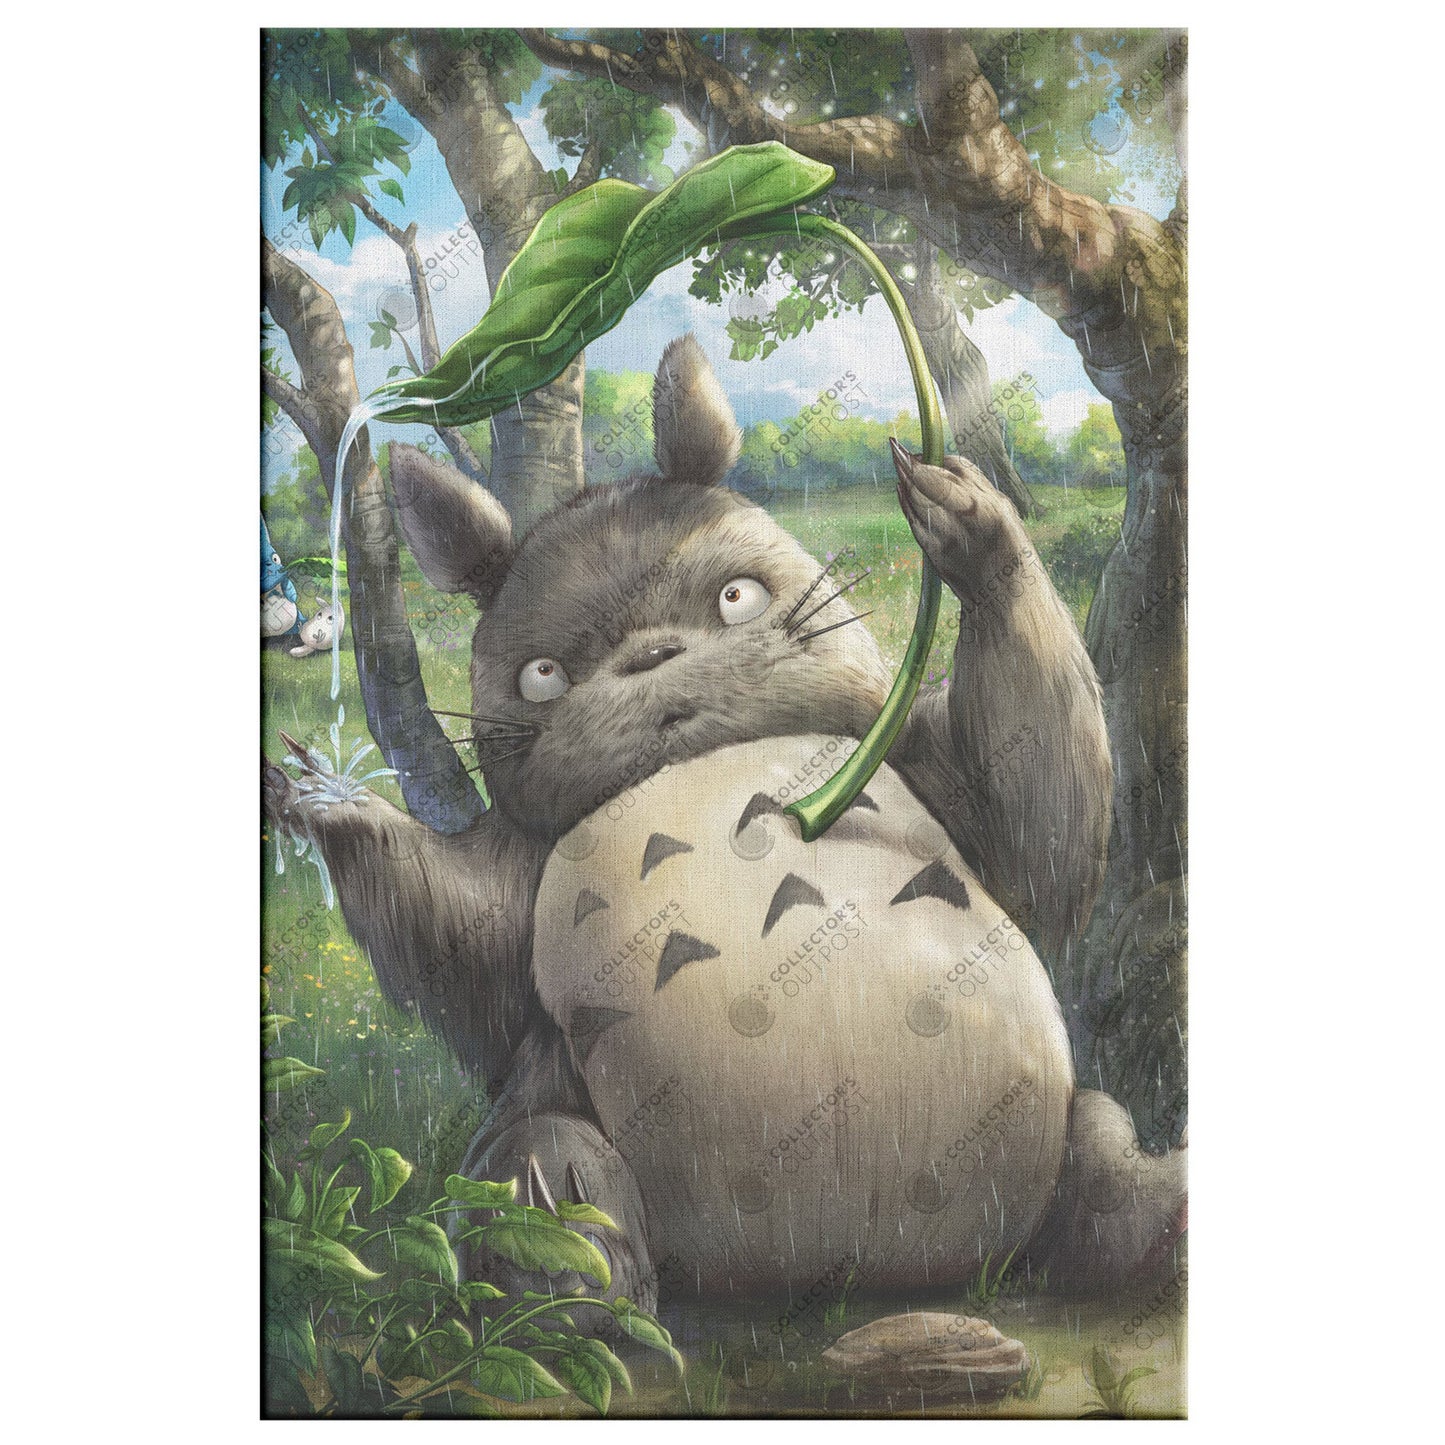 My Neighbor Totoro (Studio Ghibli) Premium Art Print Studio Ghibli